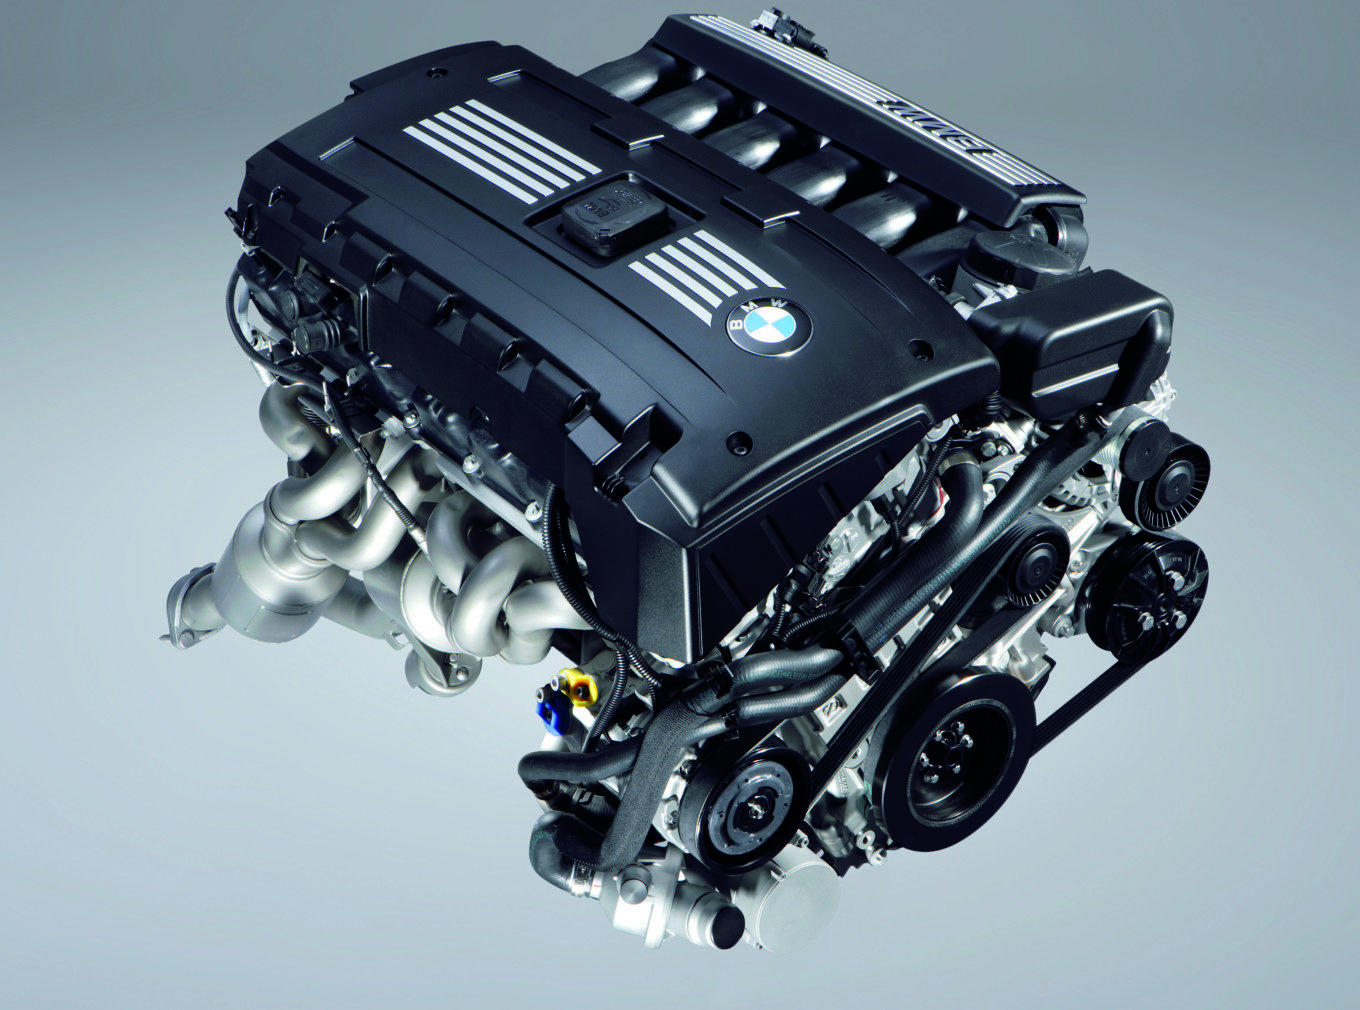 3 е мотор. Двигатель BMW n53b30. BMW С мотором n53. N54 мотор БМВ. Двигатель n52 BMW 2.5.